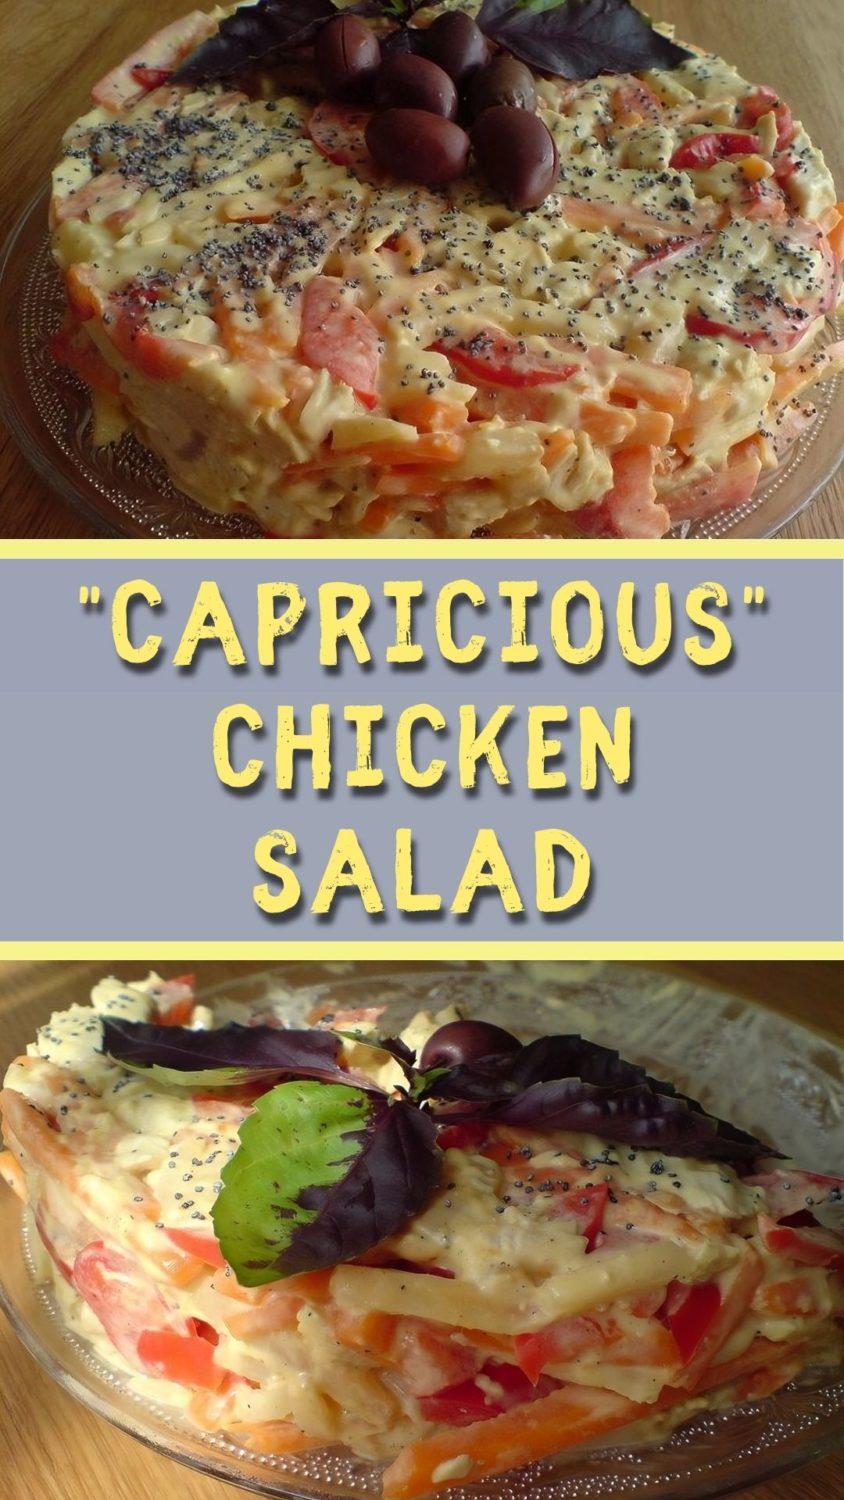 "Capricious" chicken salad